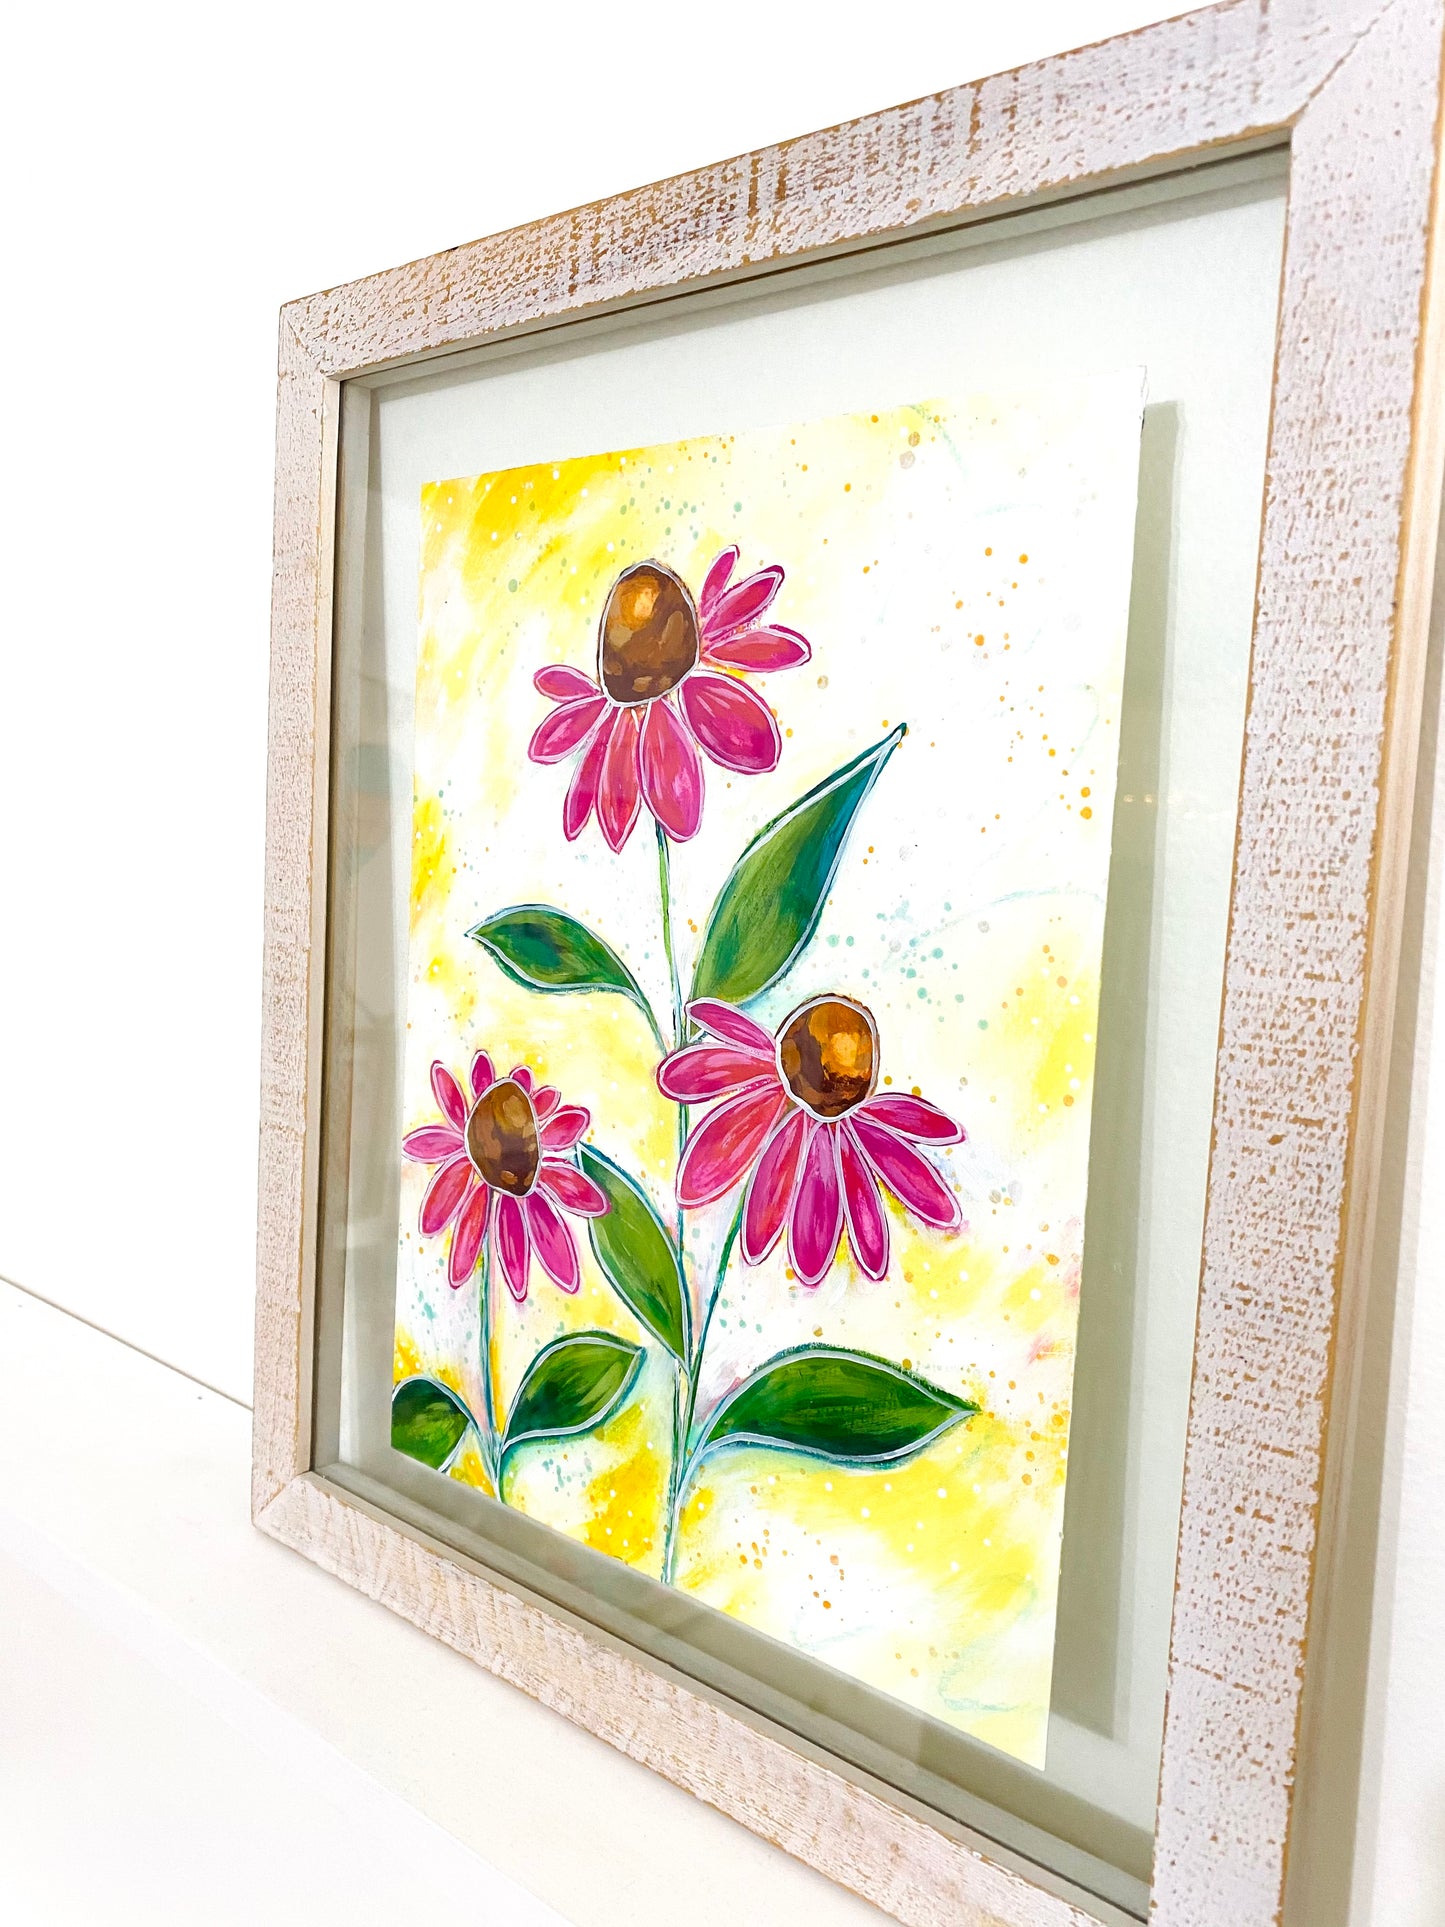 February Flowers Day 3 Echinacea 8.5x11 inch original painting